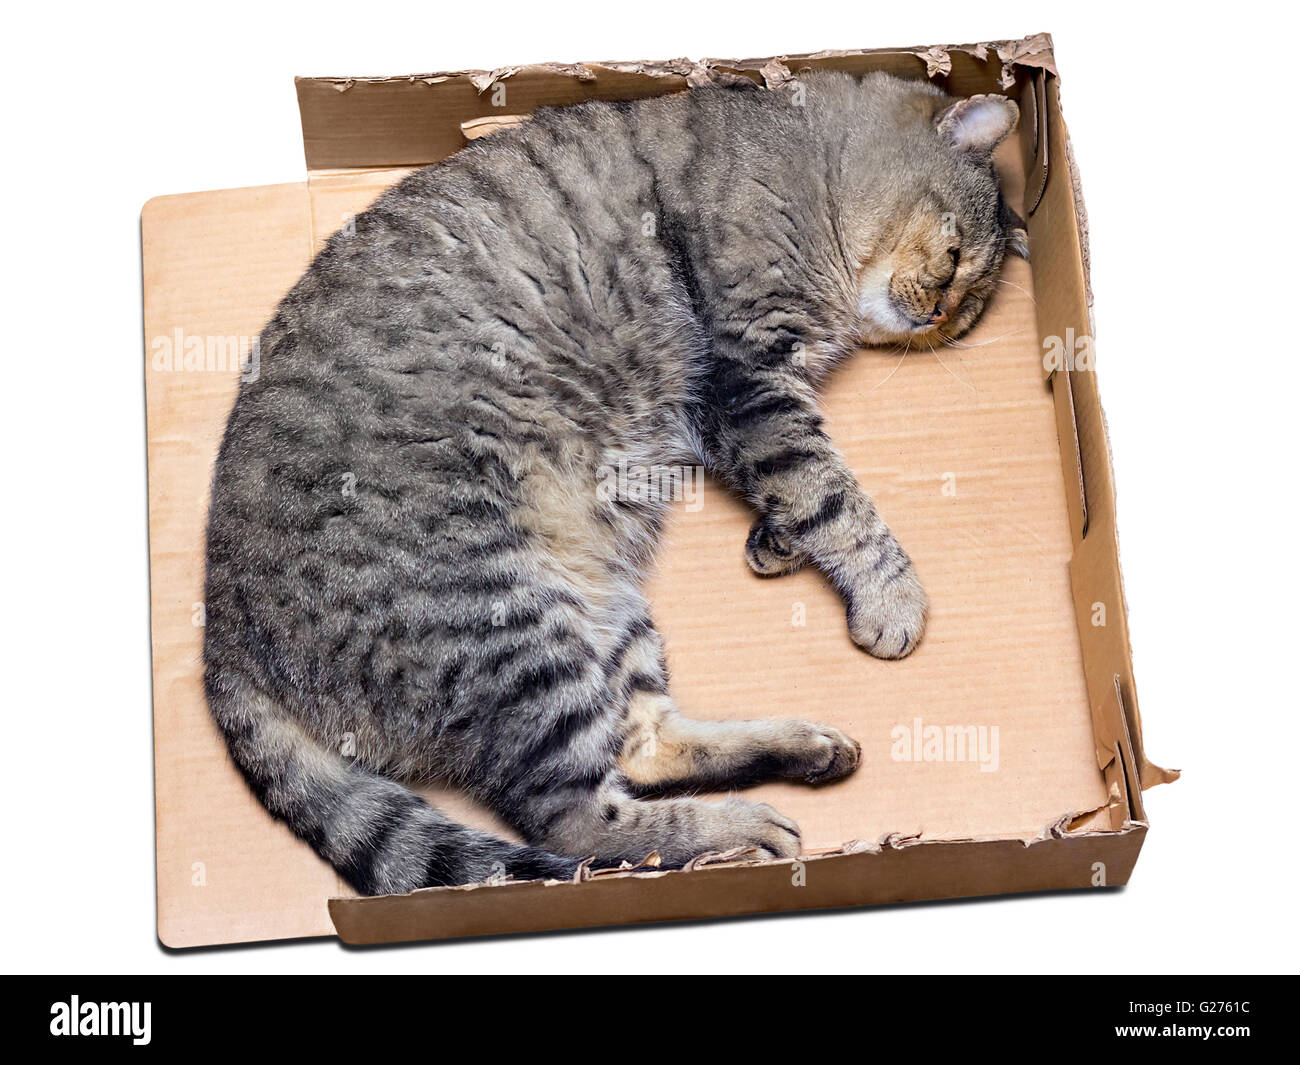 cat sleeping in a torn carton box Stock Photo